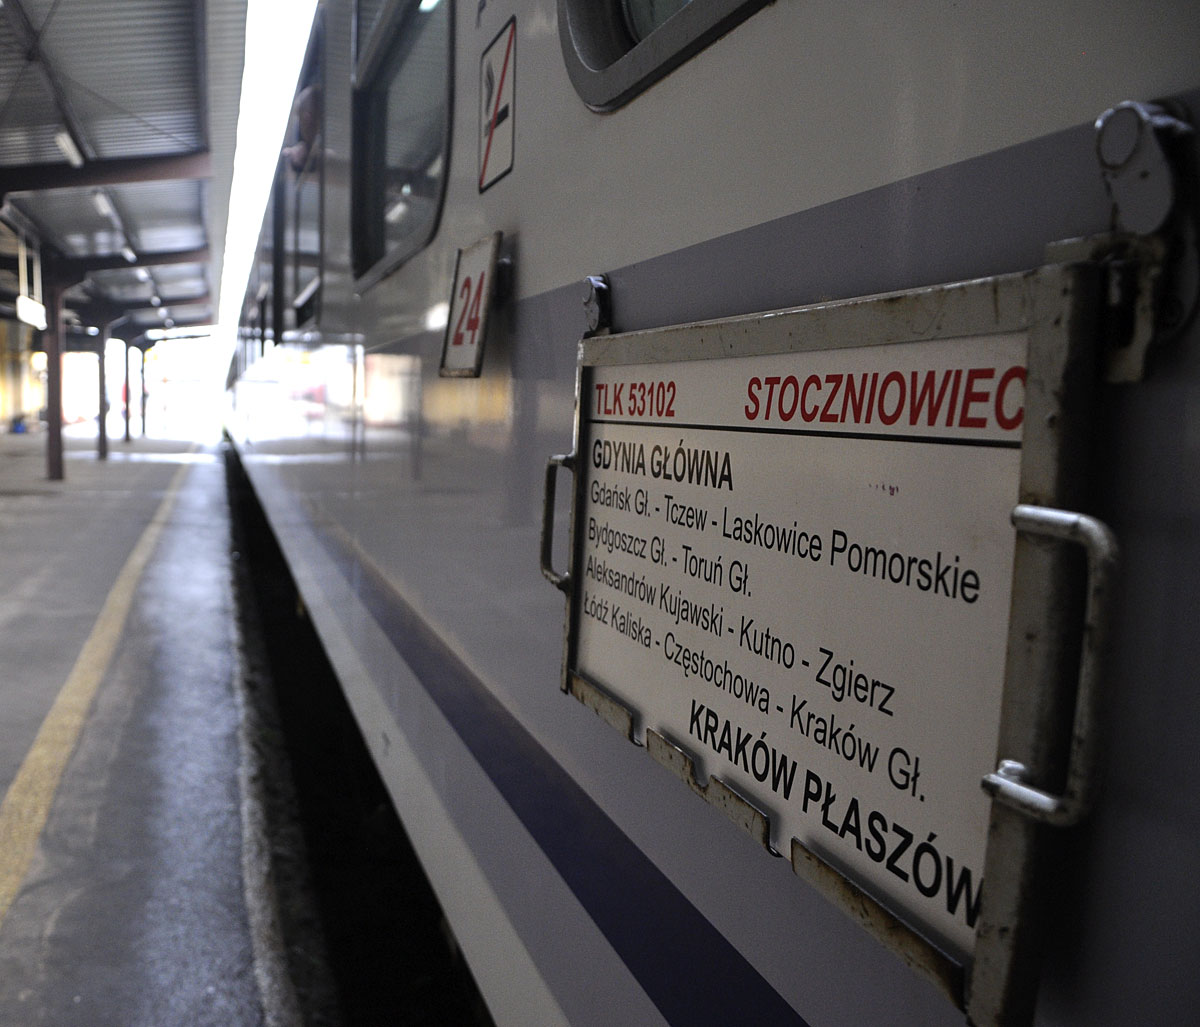 An InterCity train at the platform-Szymon Peplinski photo